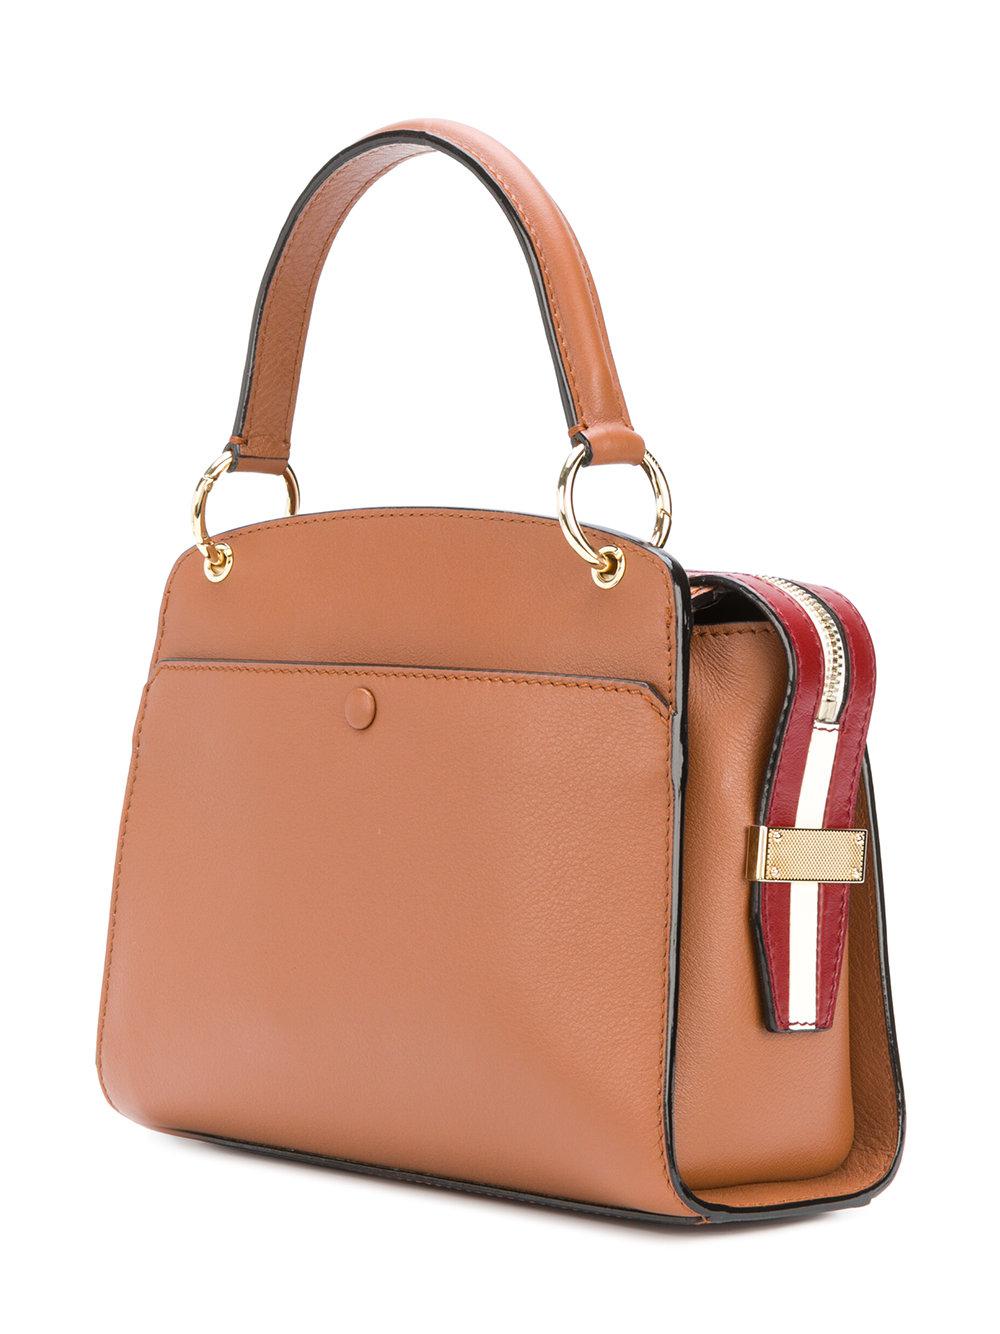 Bally Leather Amoeba Bag in Brown - Lyst